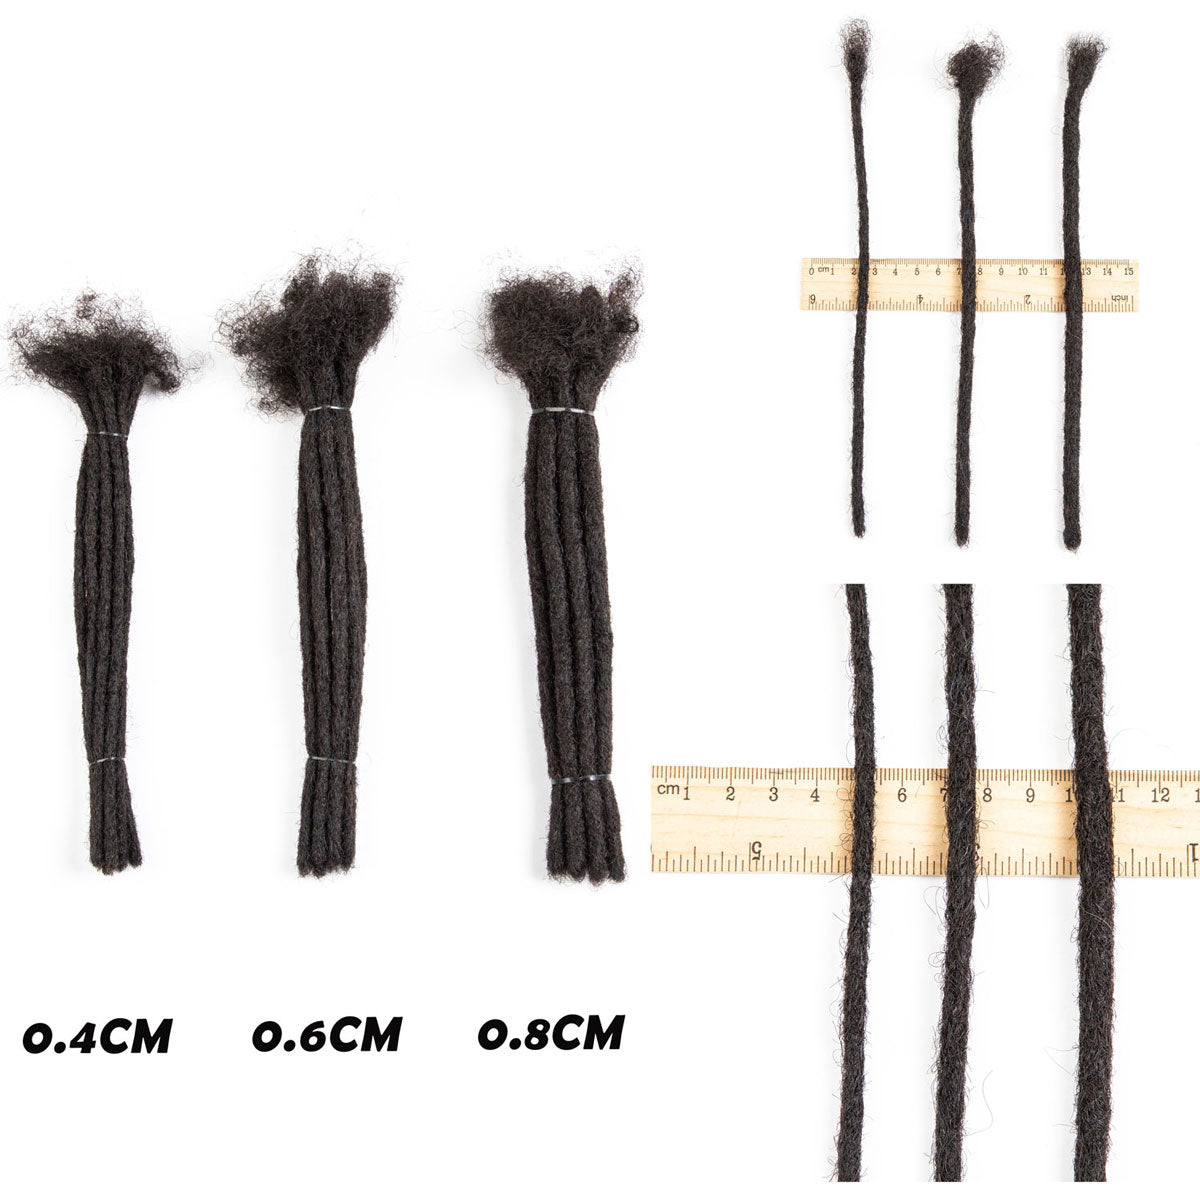 #27 Honey Blonde Human Hair Dreadlocks Extensions  Handmade Locs 0.4cm-0.8cm Thickness